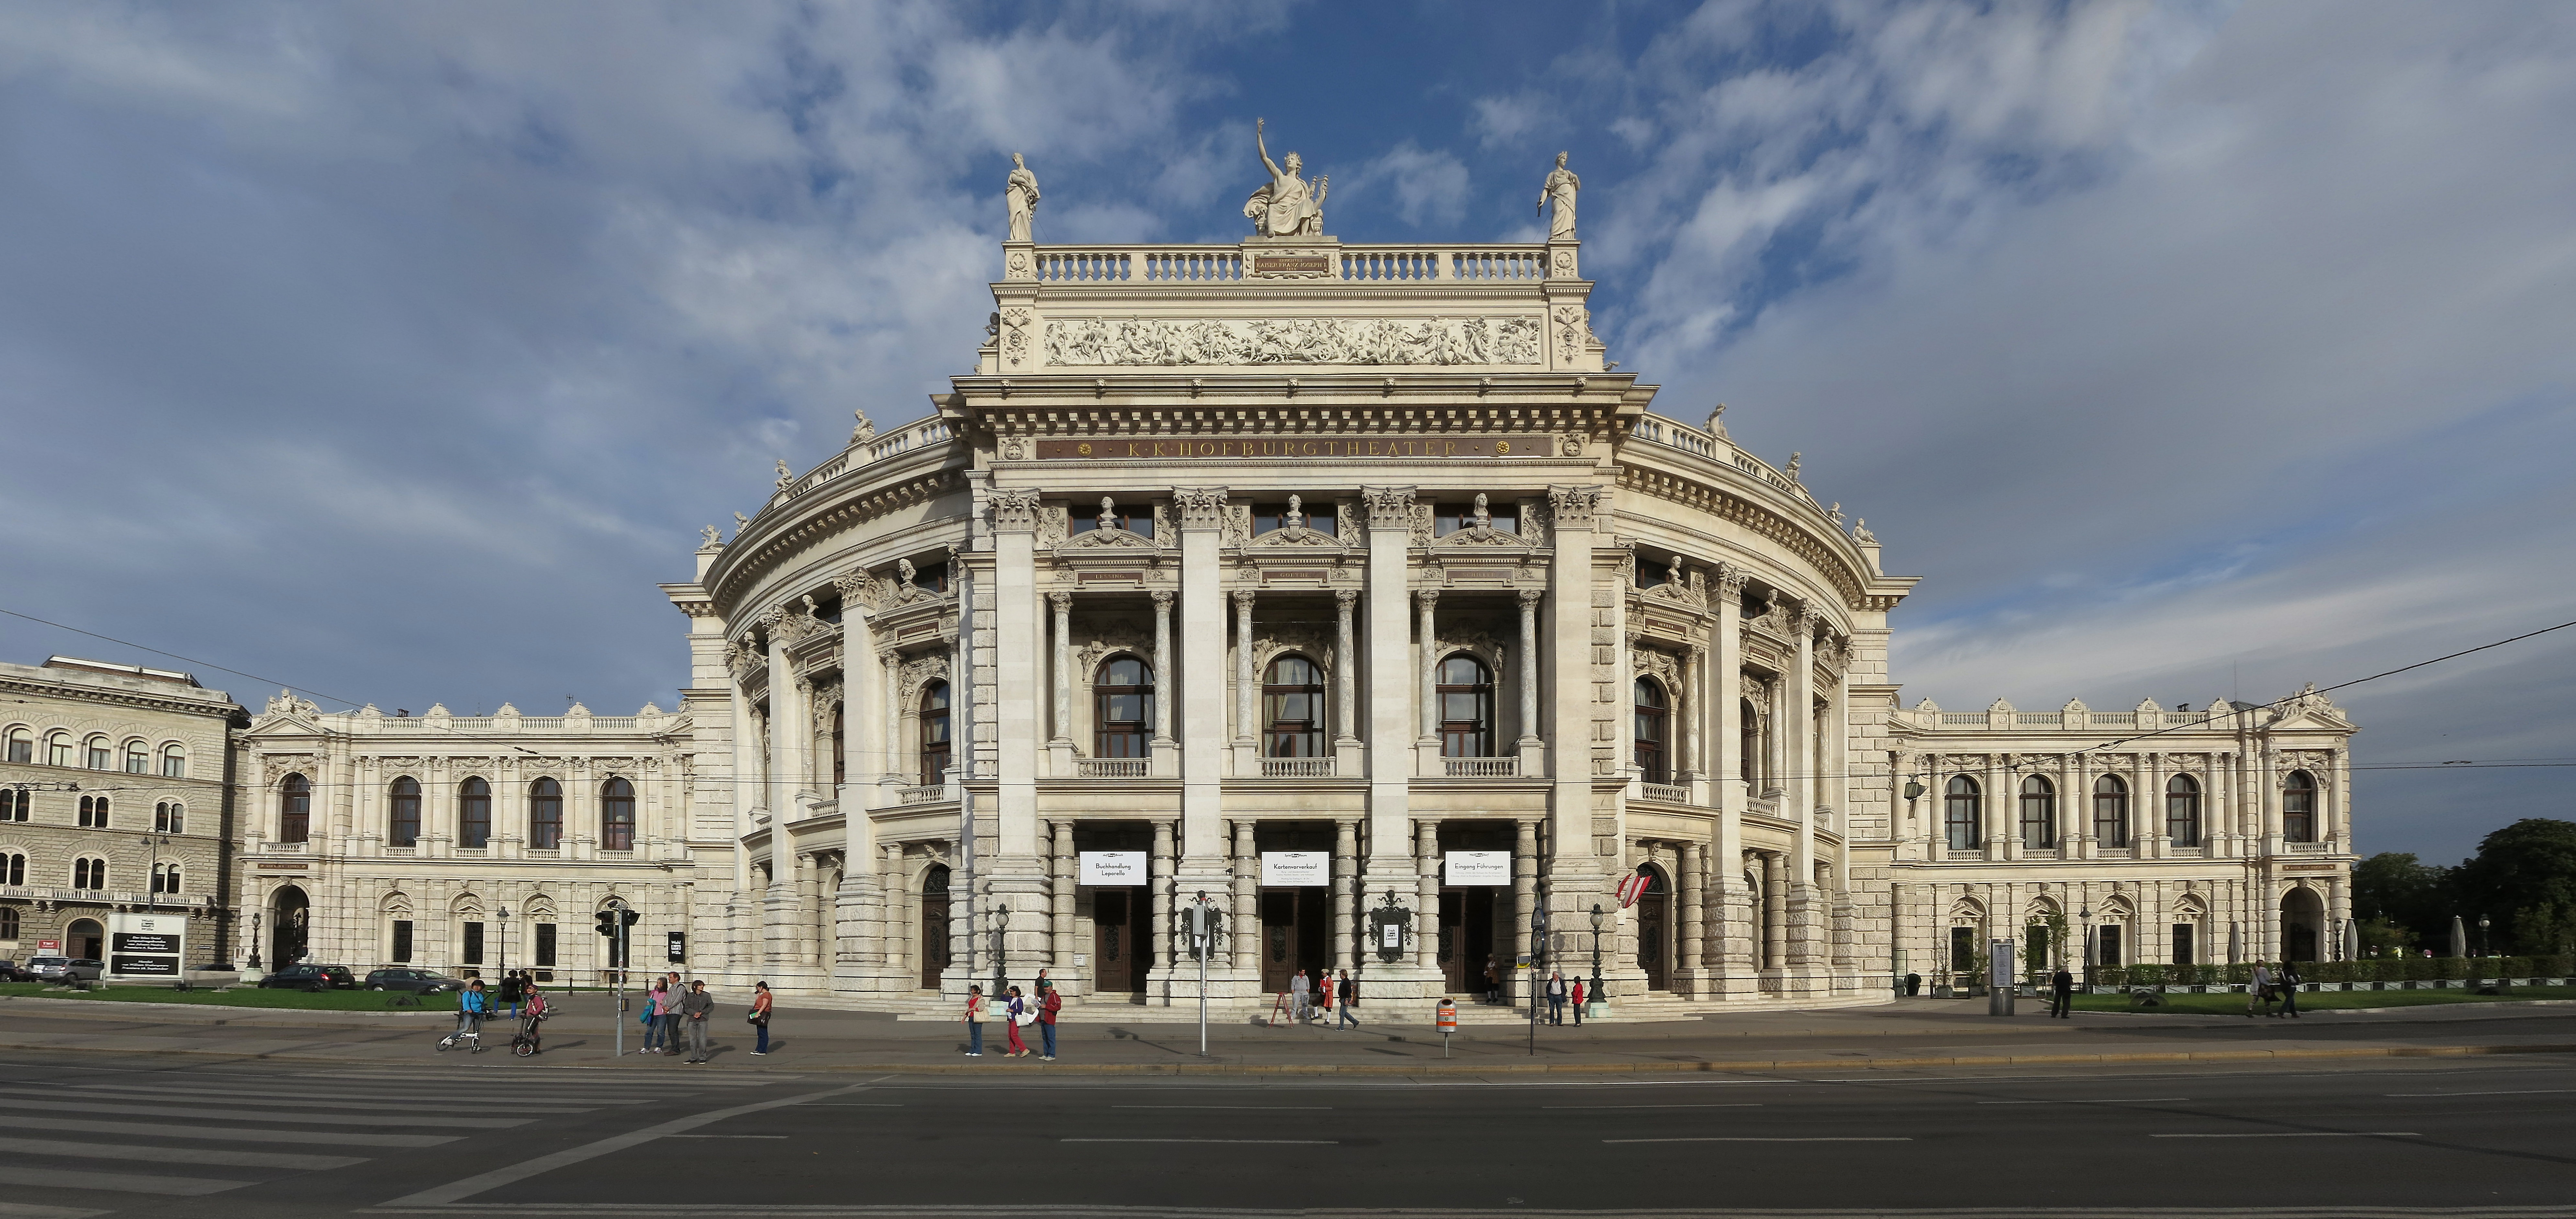 Wien Burgtheater, Vienna, Austria. Photo taken by Thomas Ledl on September 2, 2013.